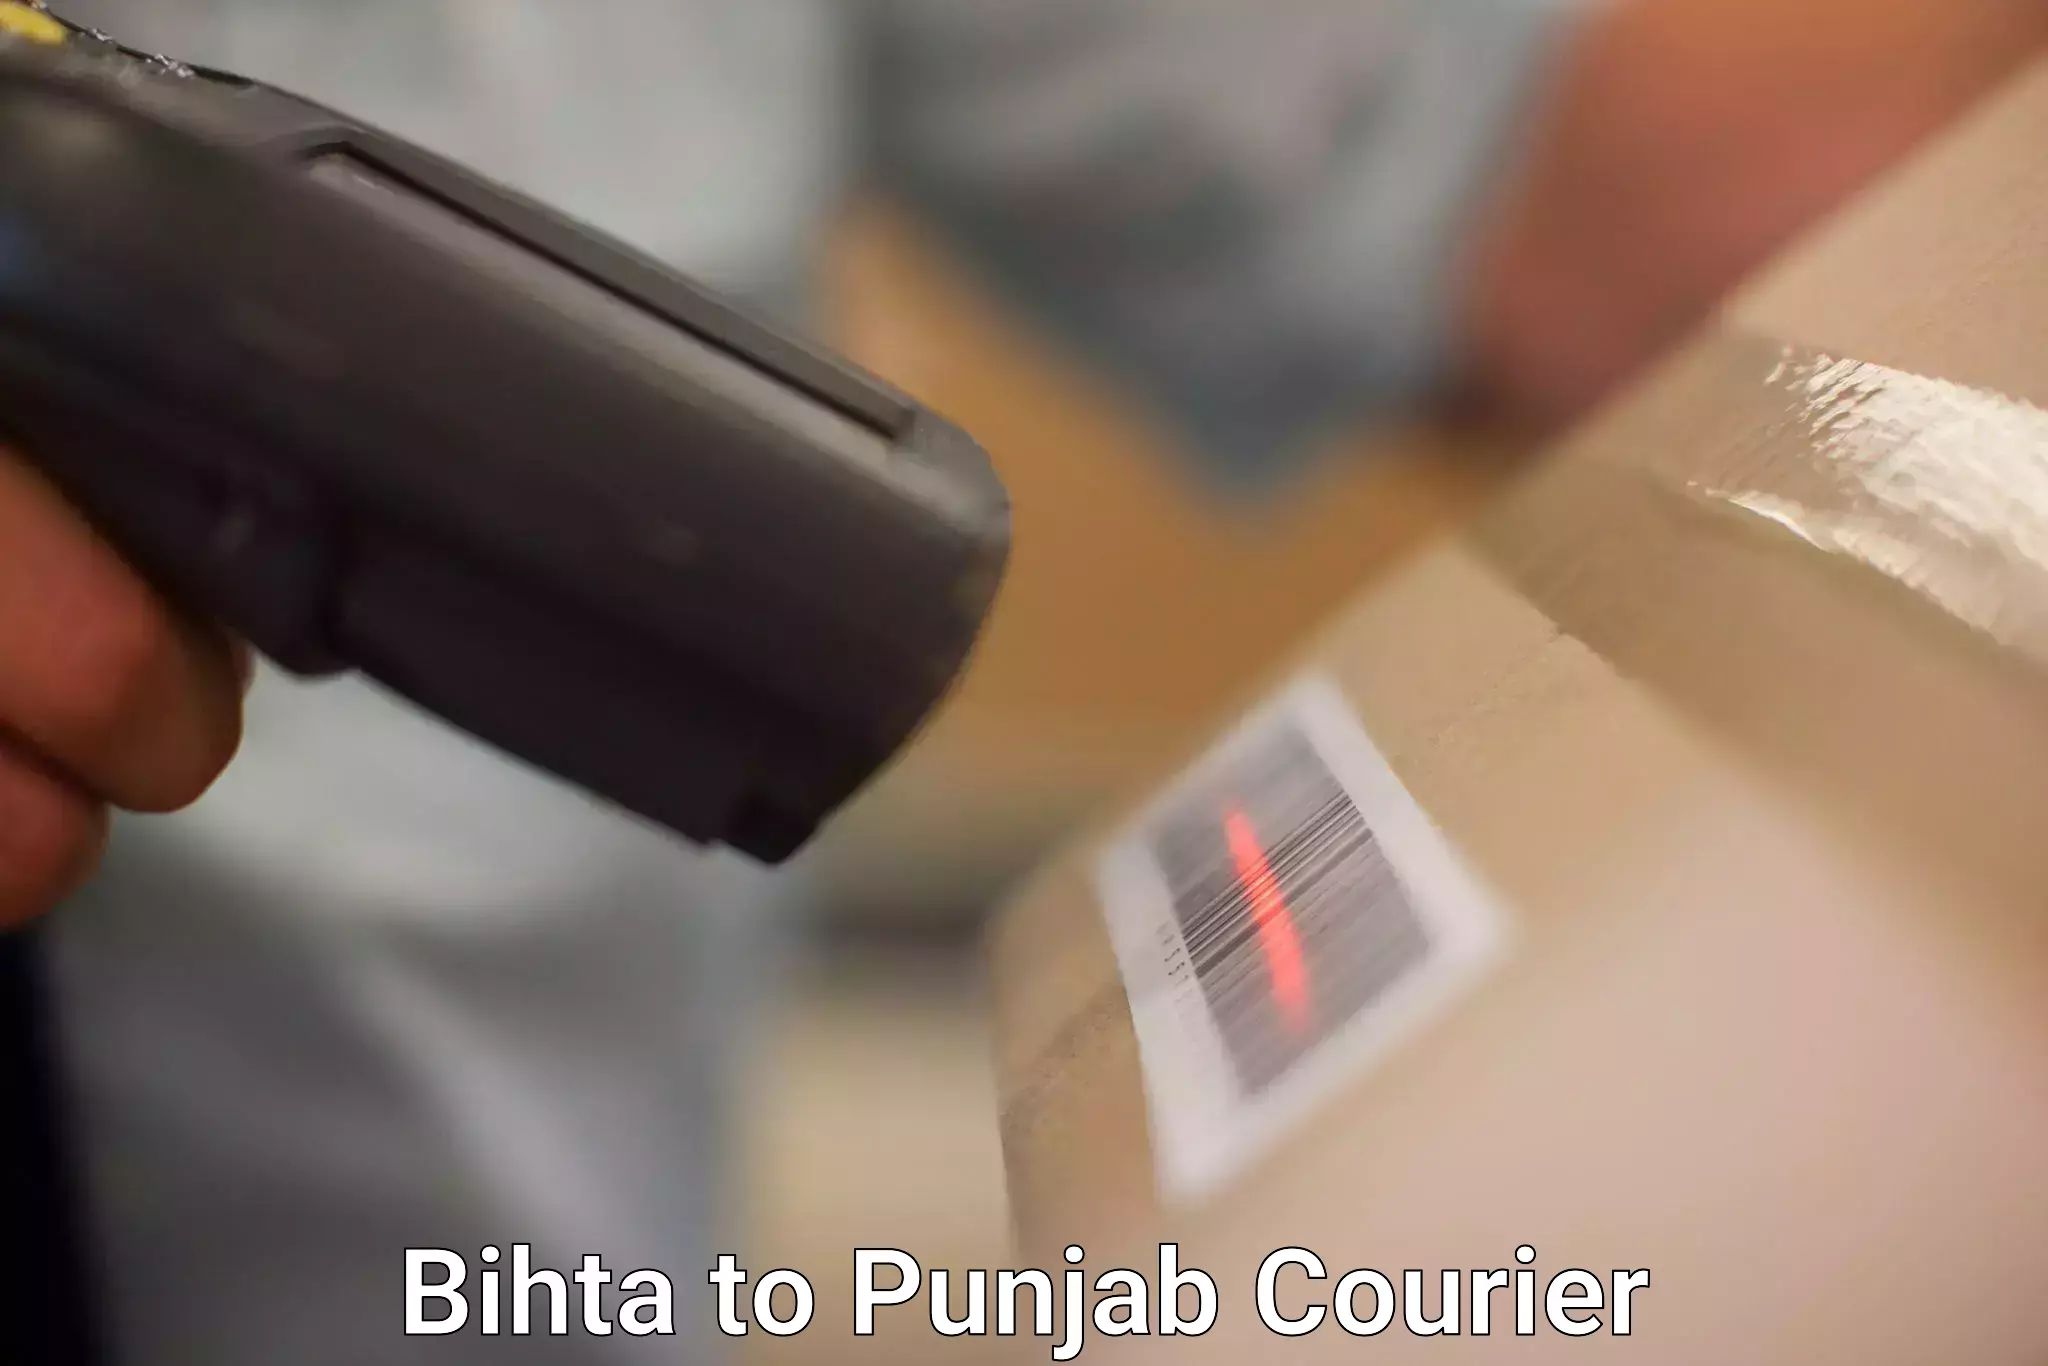 Speedy delivery service Bihta to Amritsar